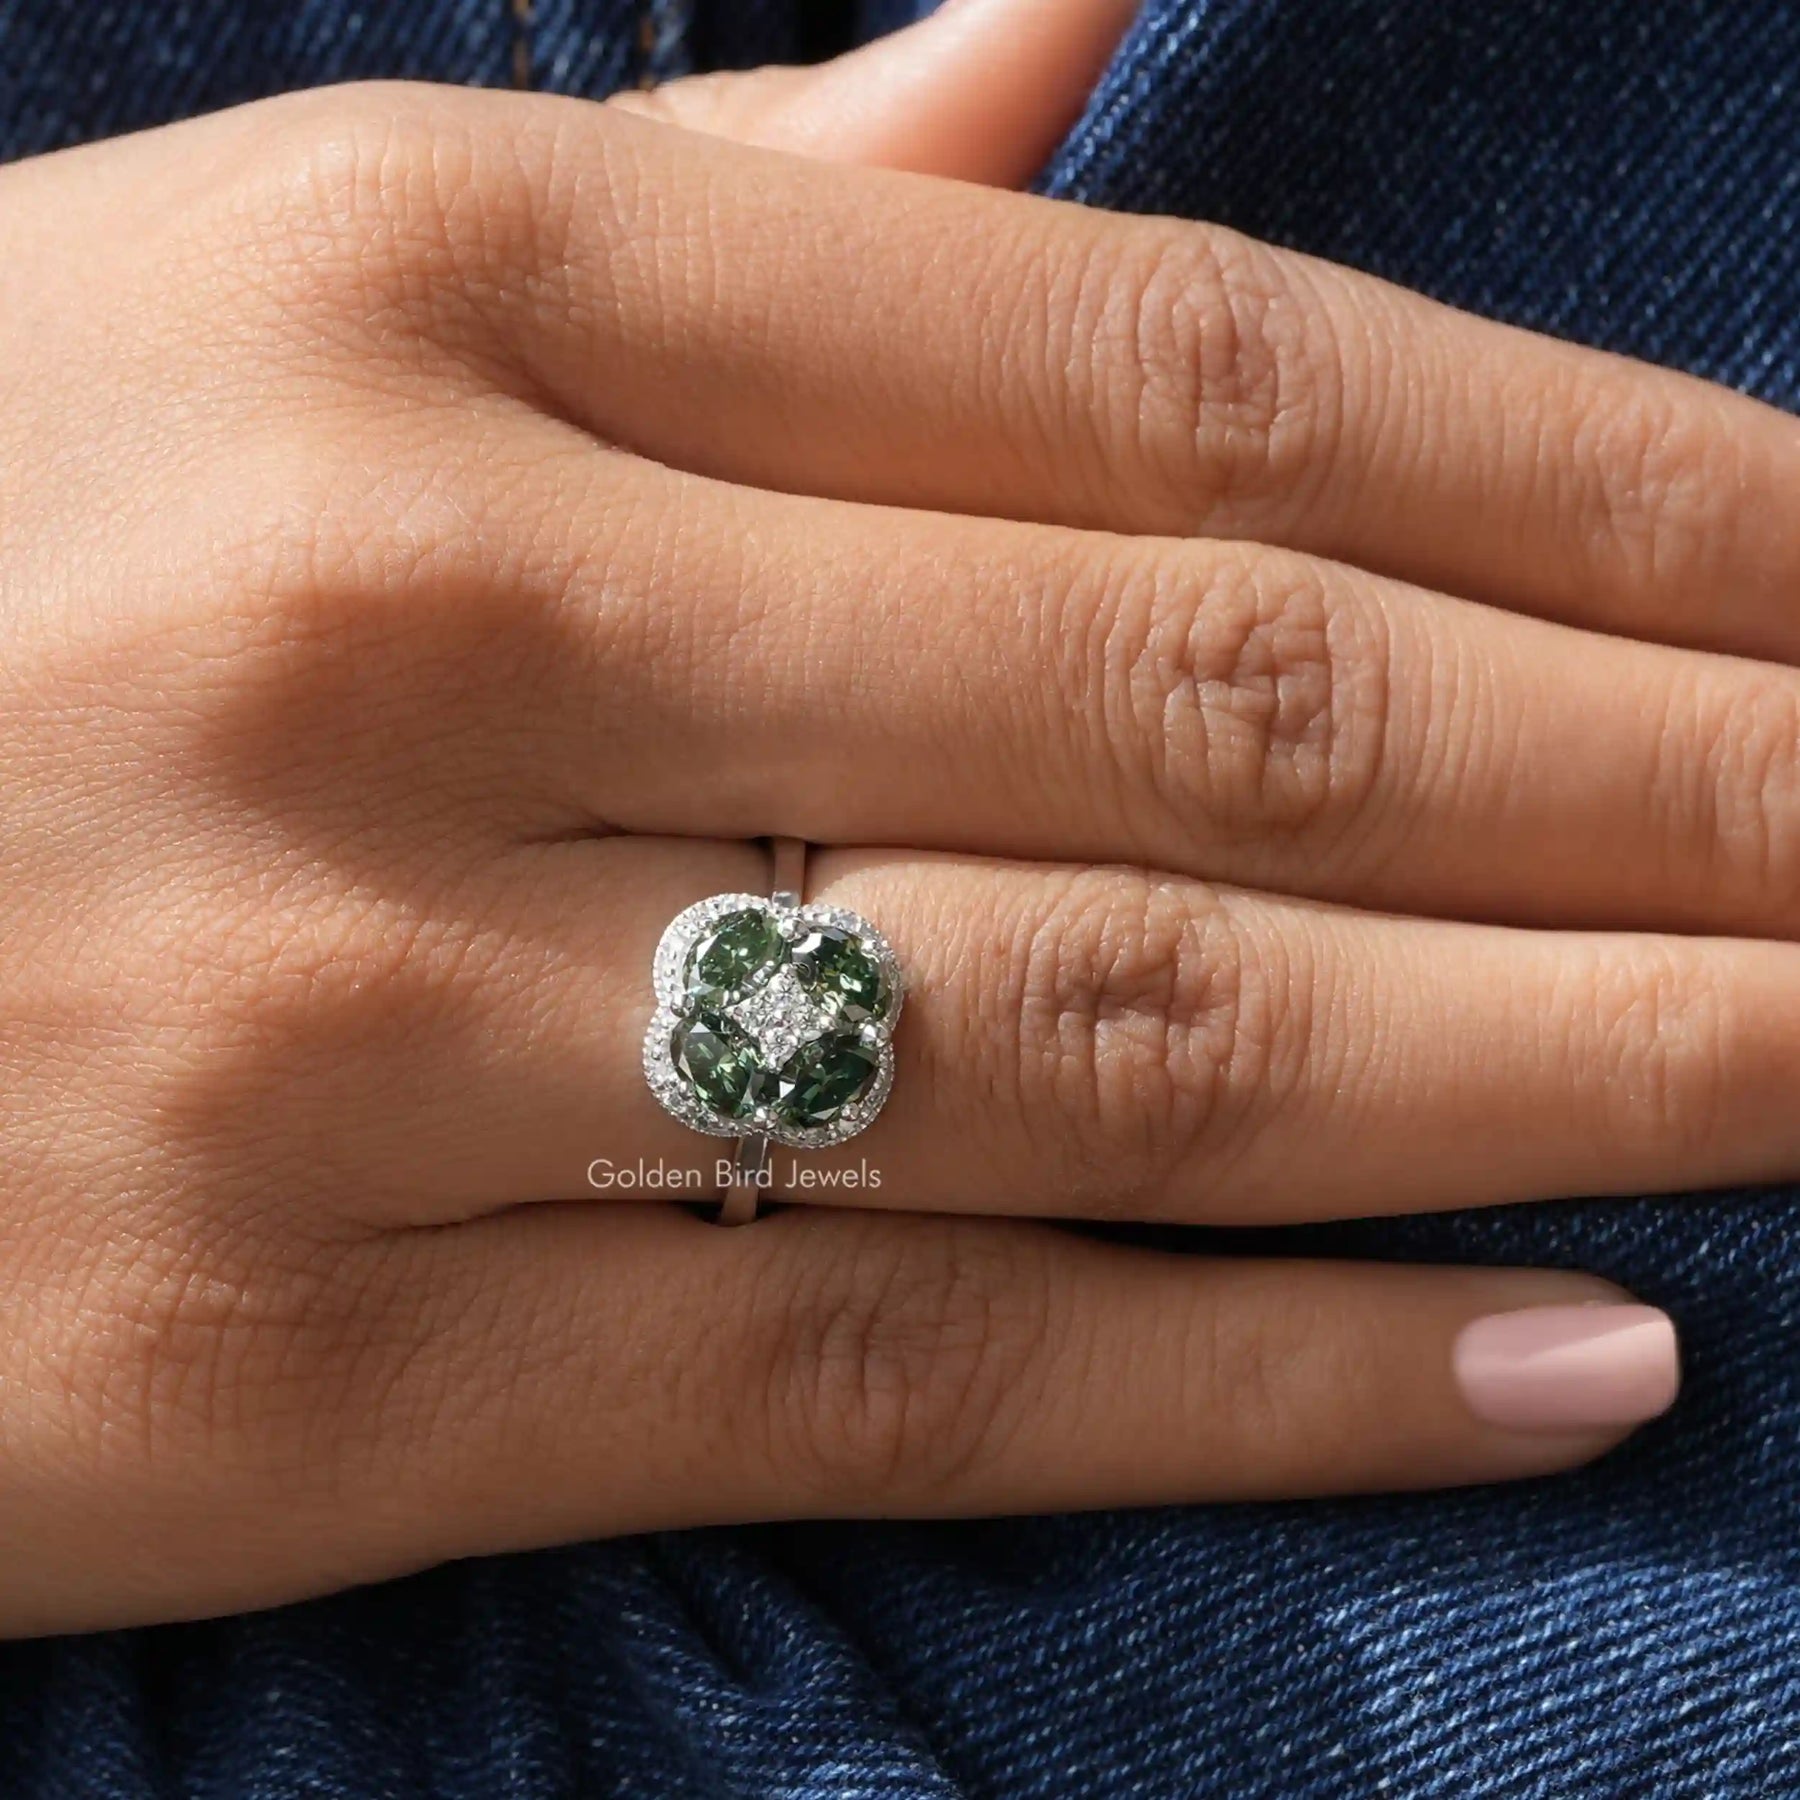 [Green oval cut moissanite wedding ring made of 14k white gold]-[Golden Bird Jewels]